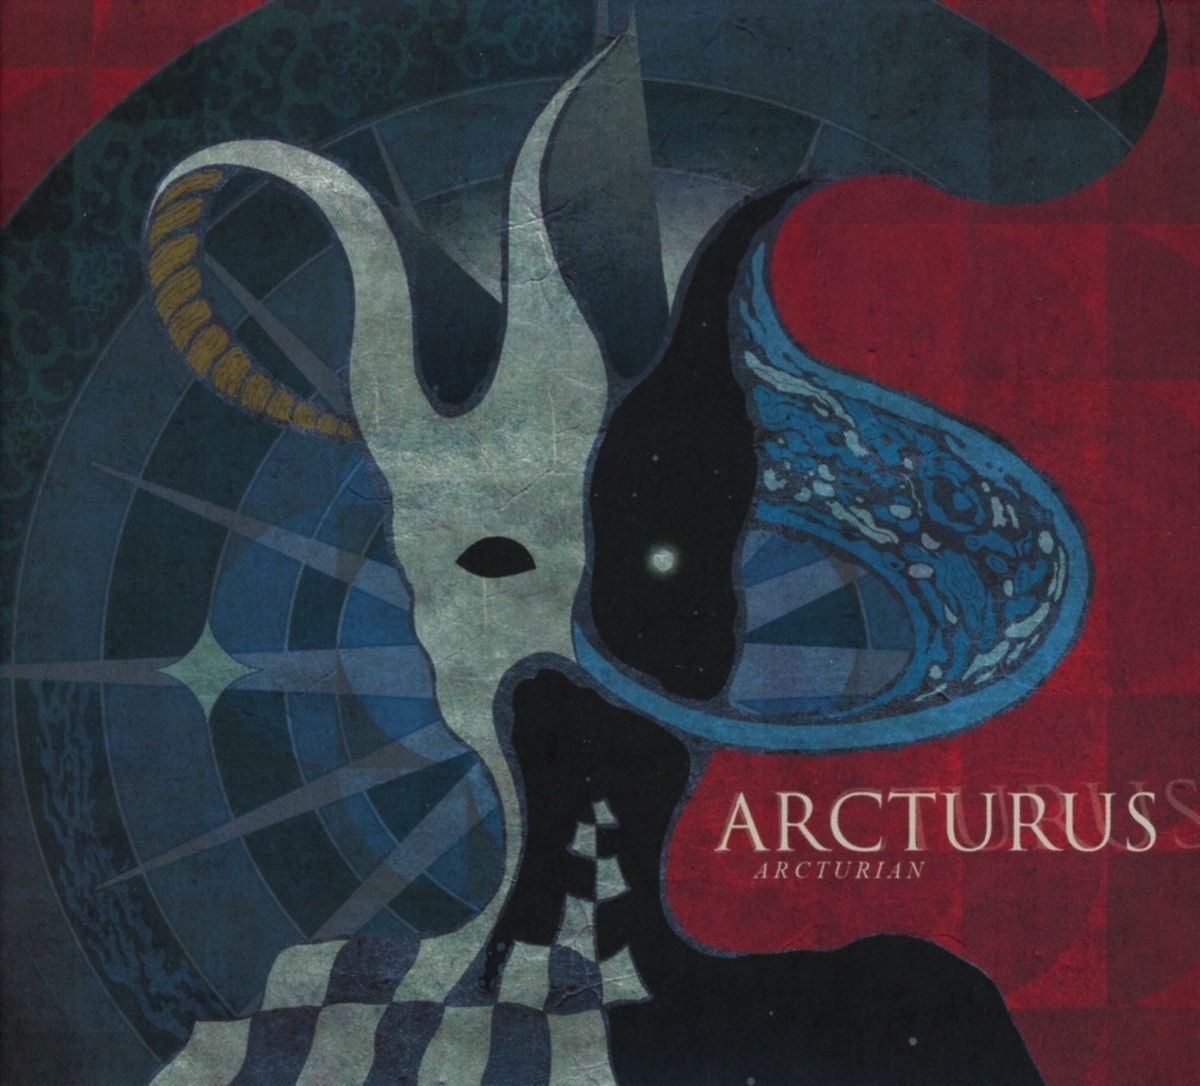 Arcturian (Digipak) - Arcturus. (CD)